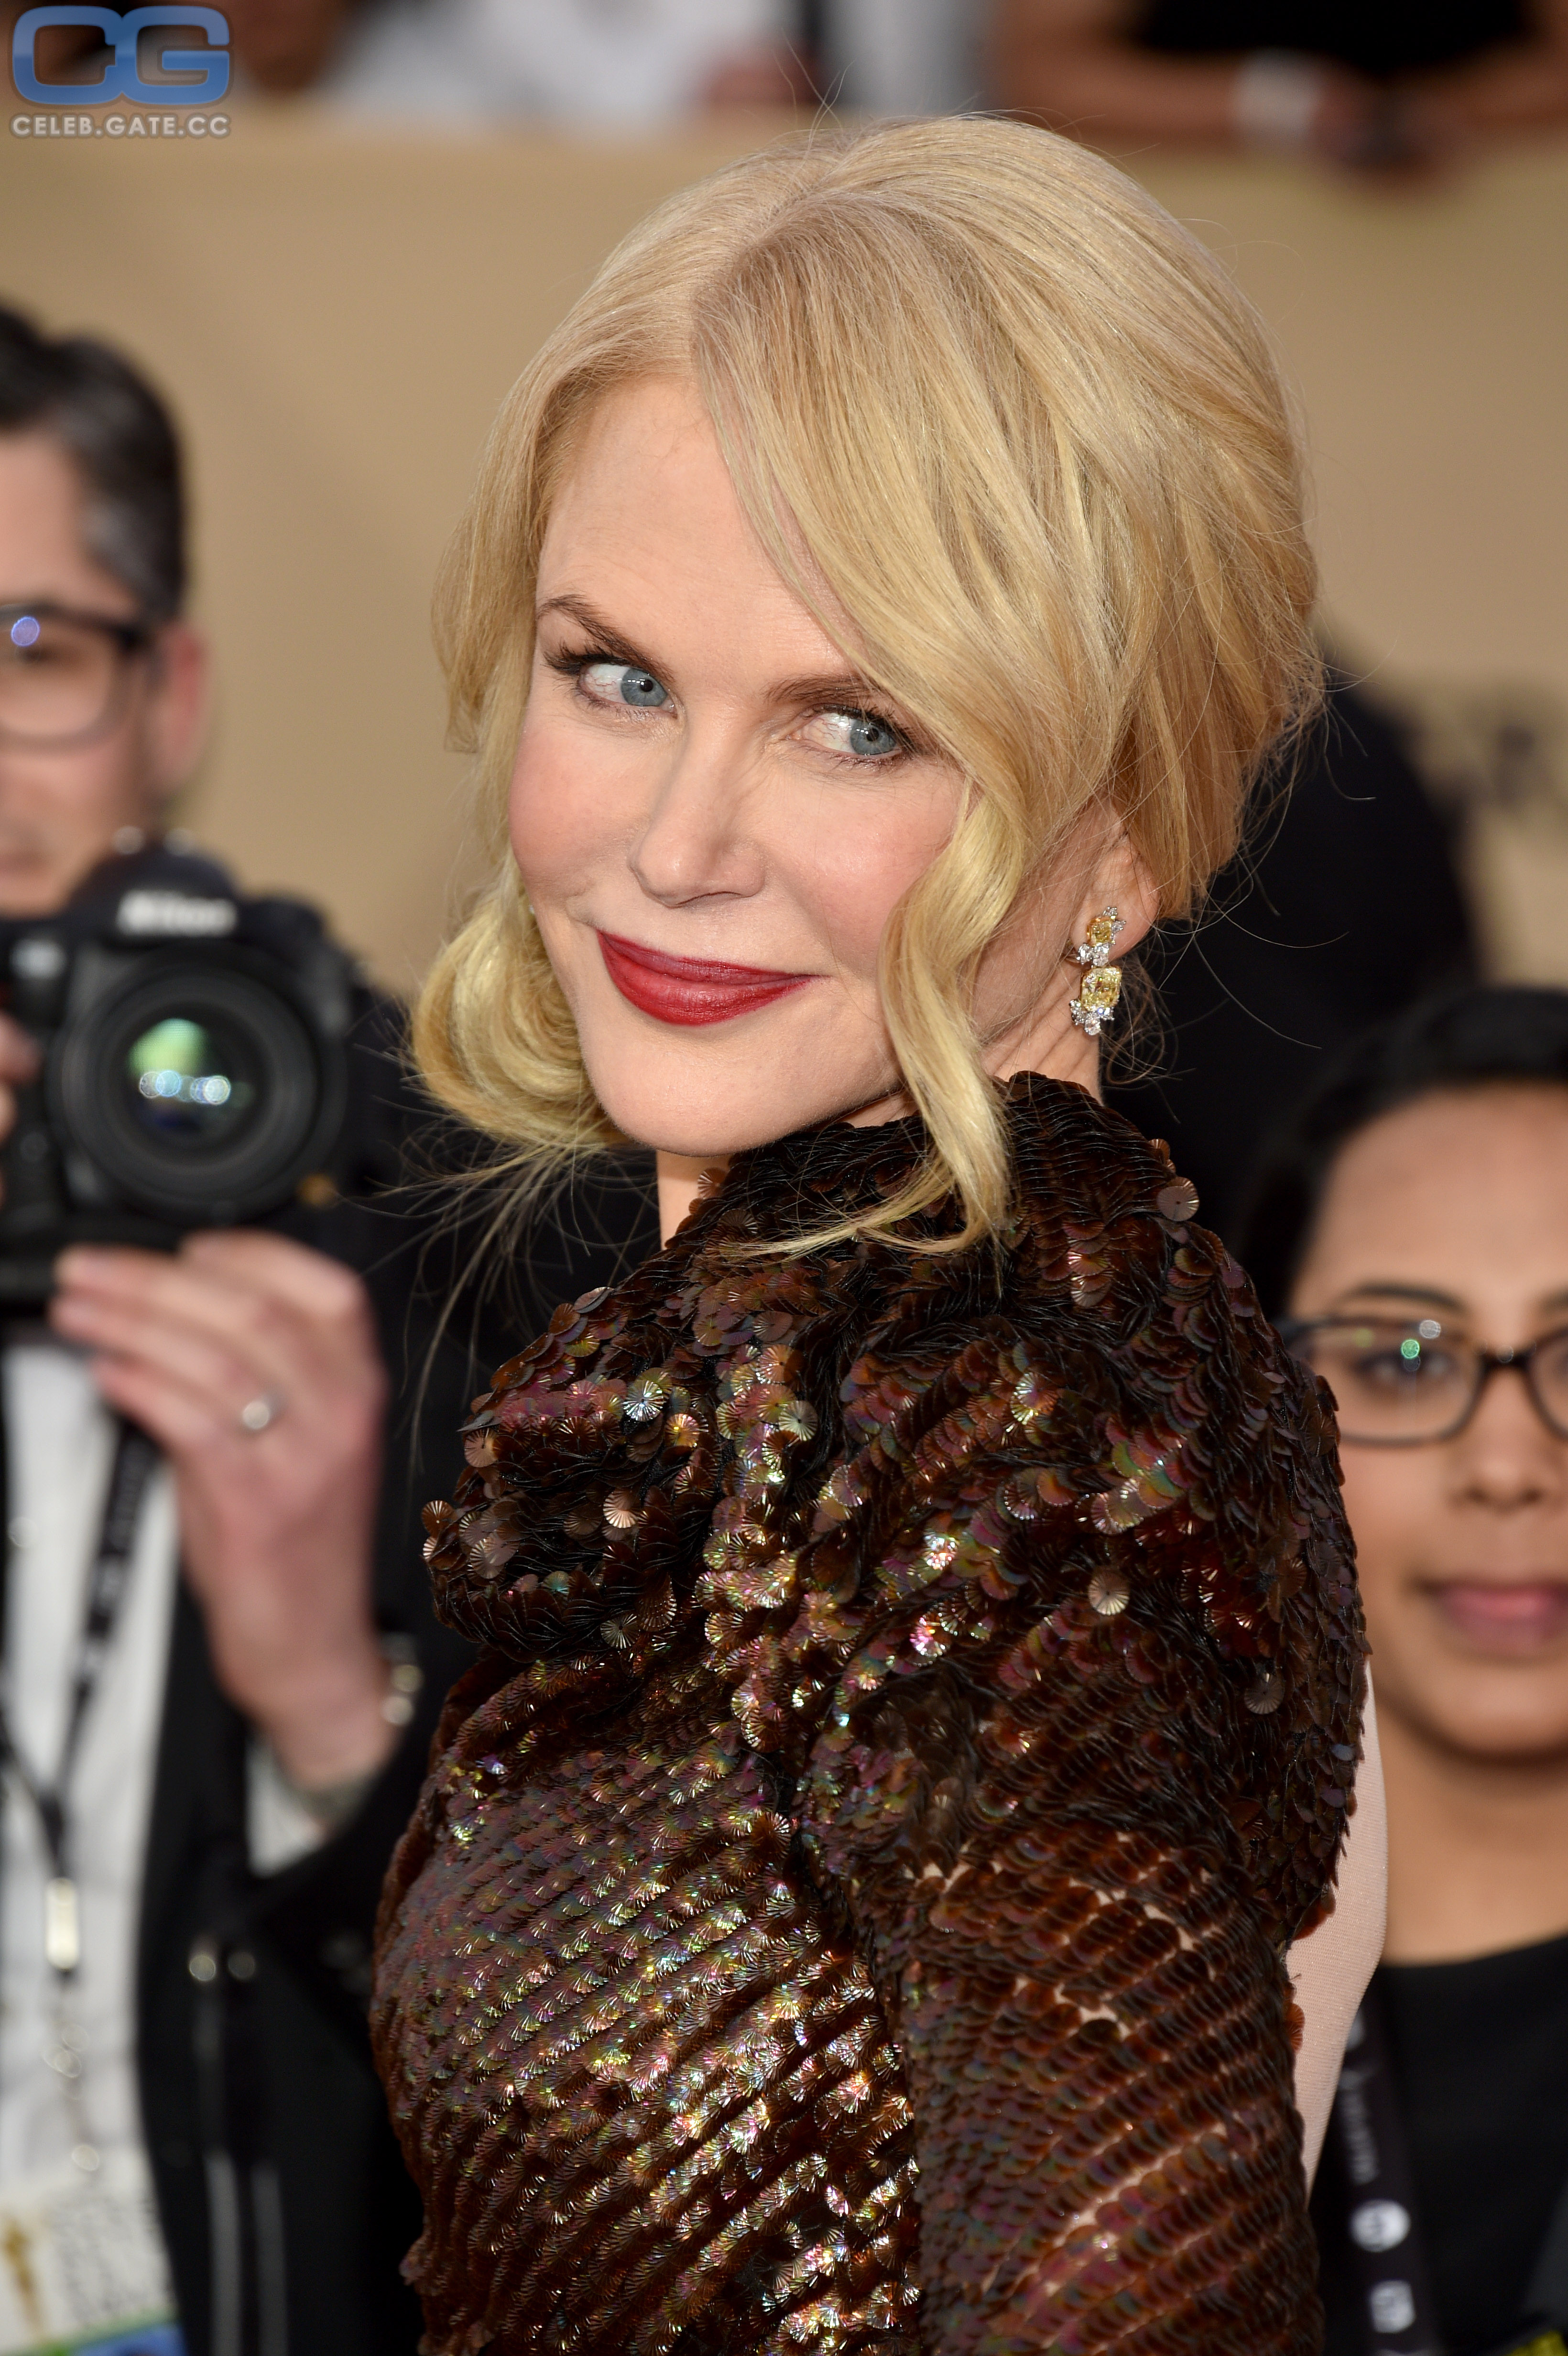 Nicole Kidman face